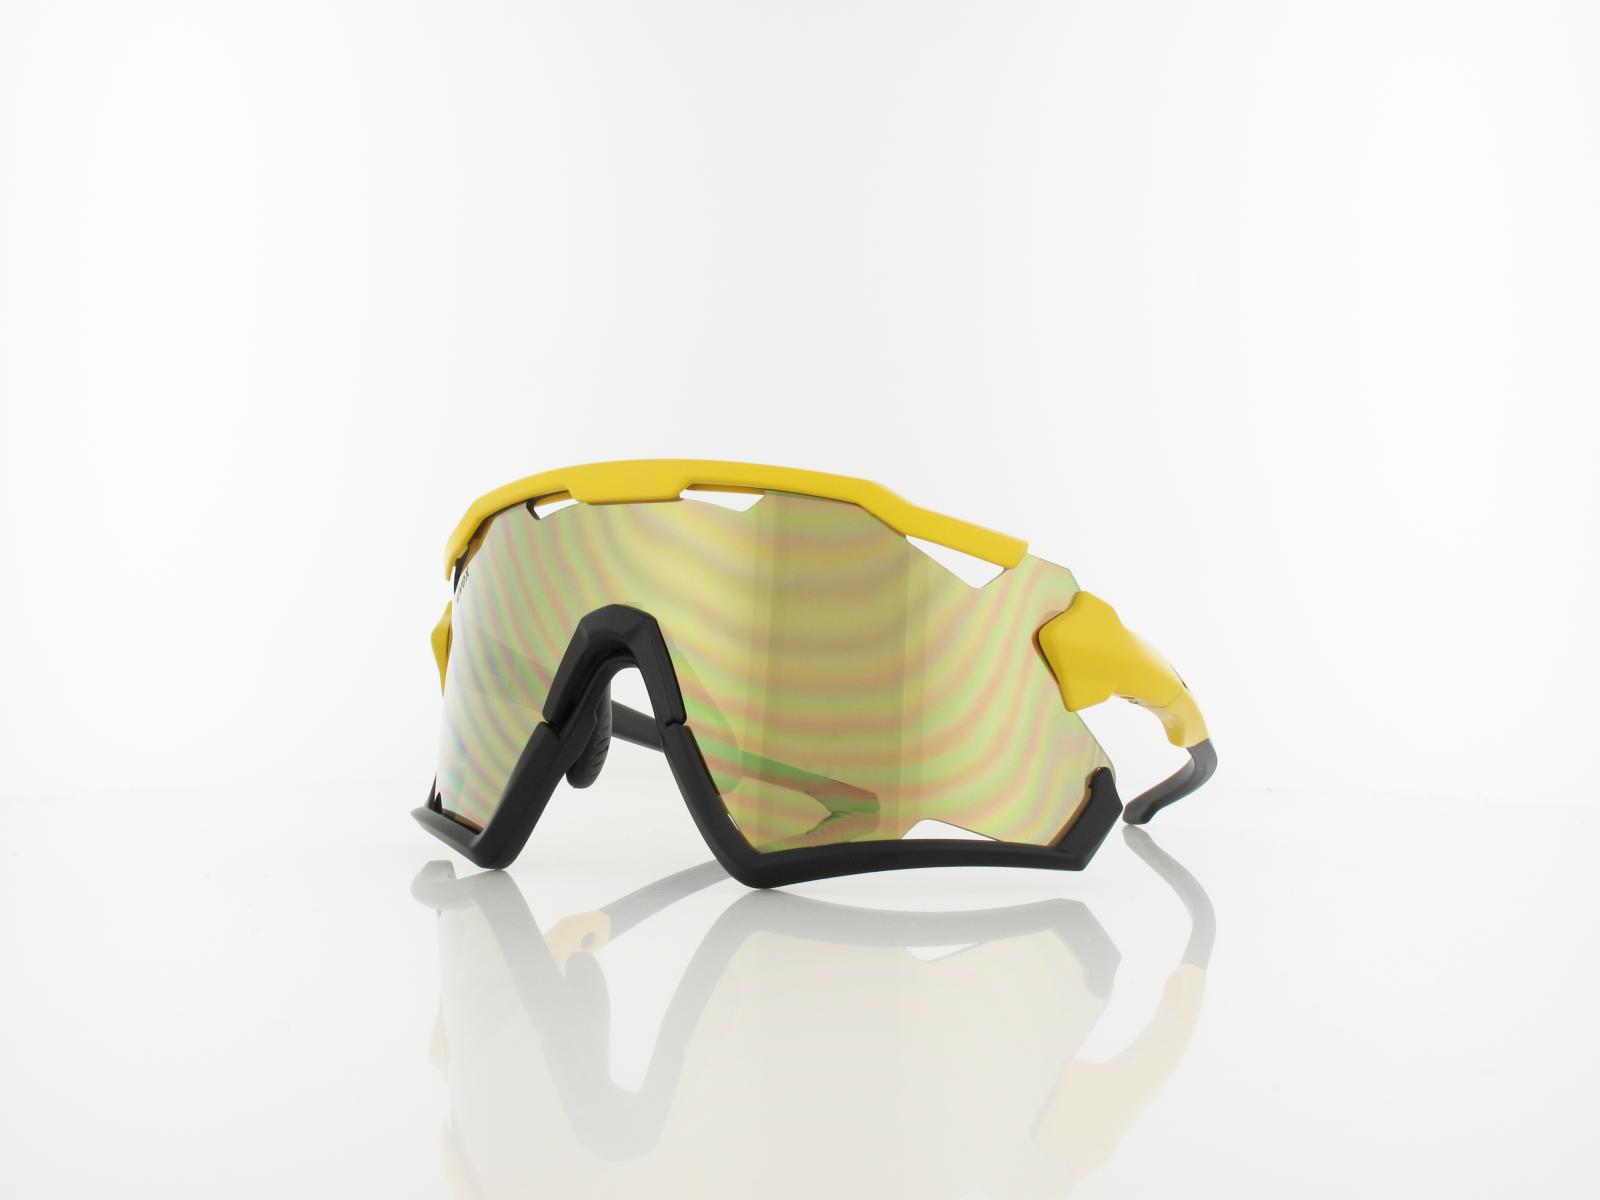 UVEX | sportstyle 228 S532067 6216 132 | sunbee black matt / mirror yellow